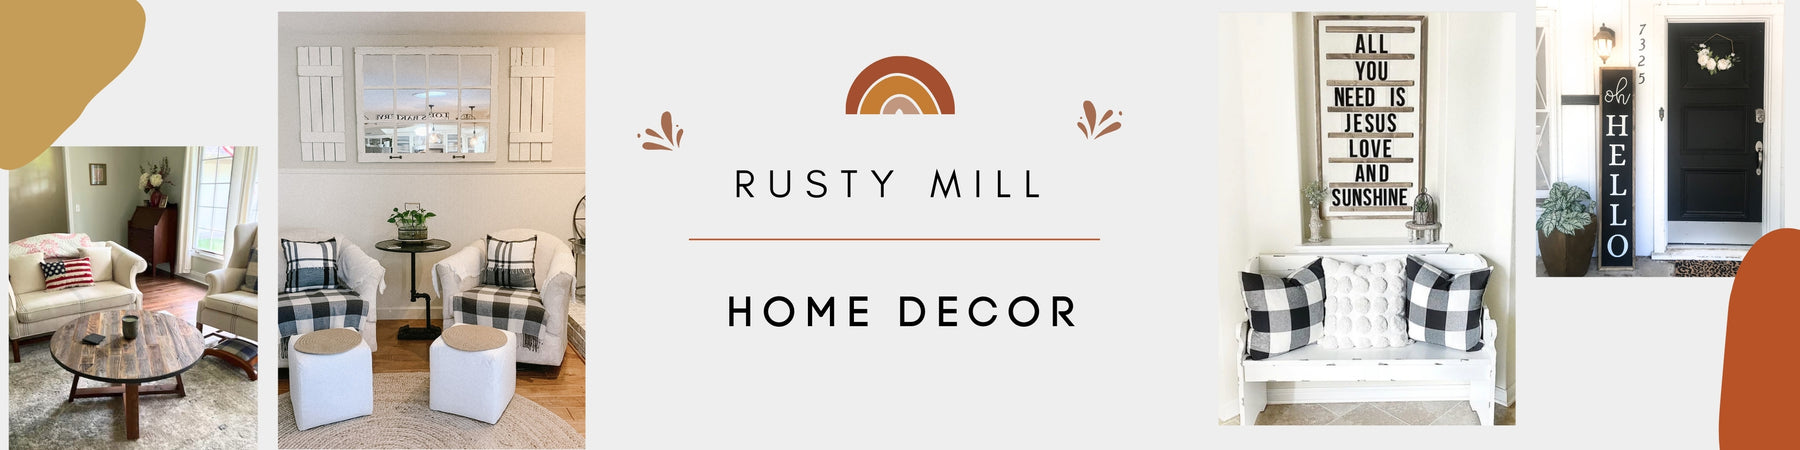 Rusty Mill Decor